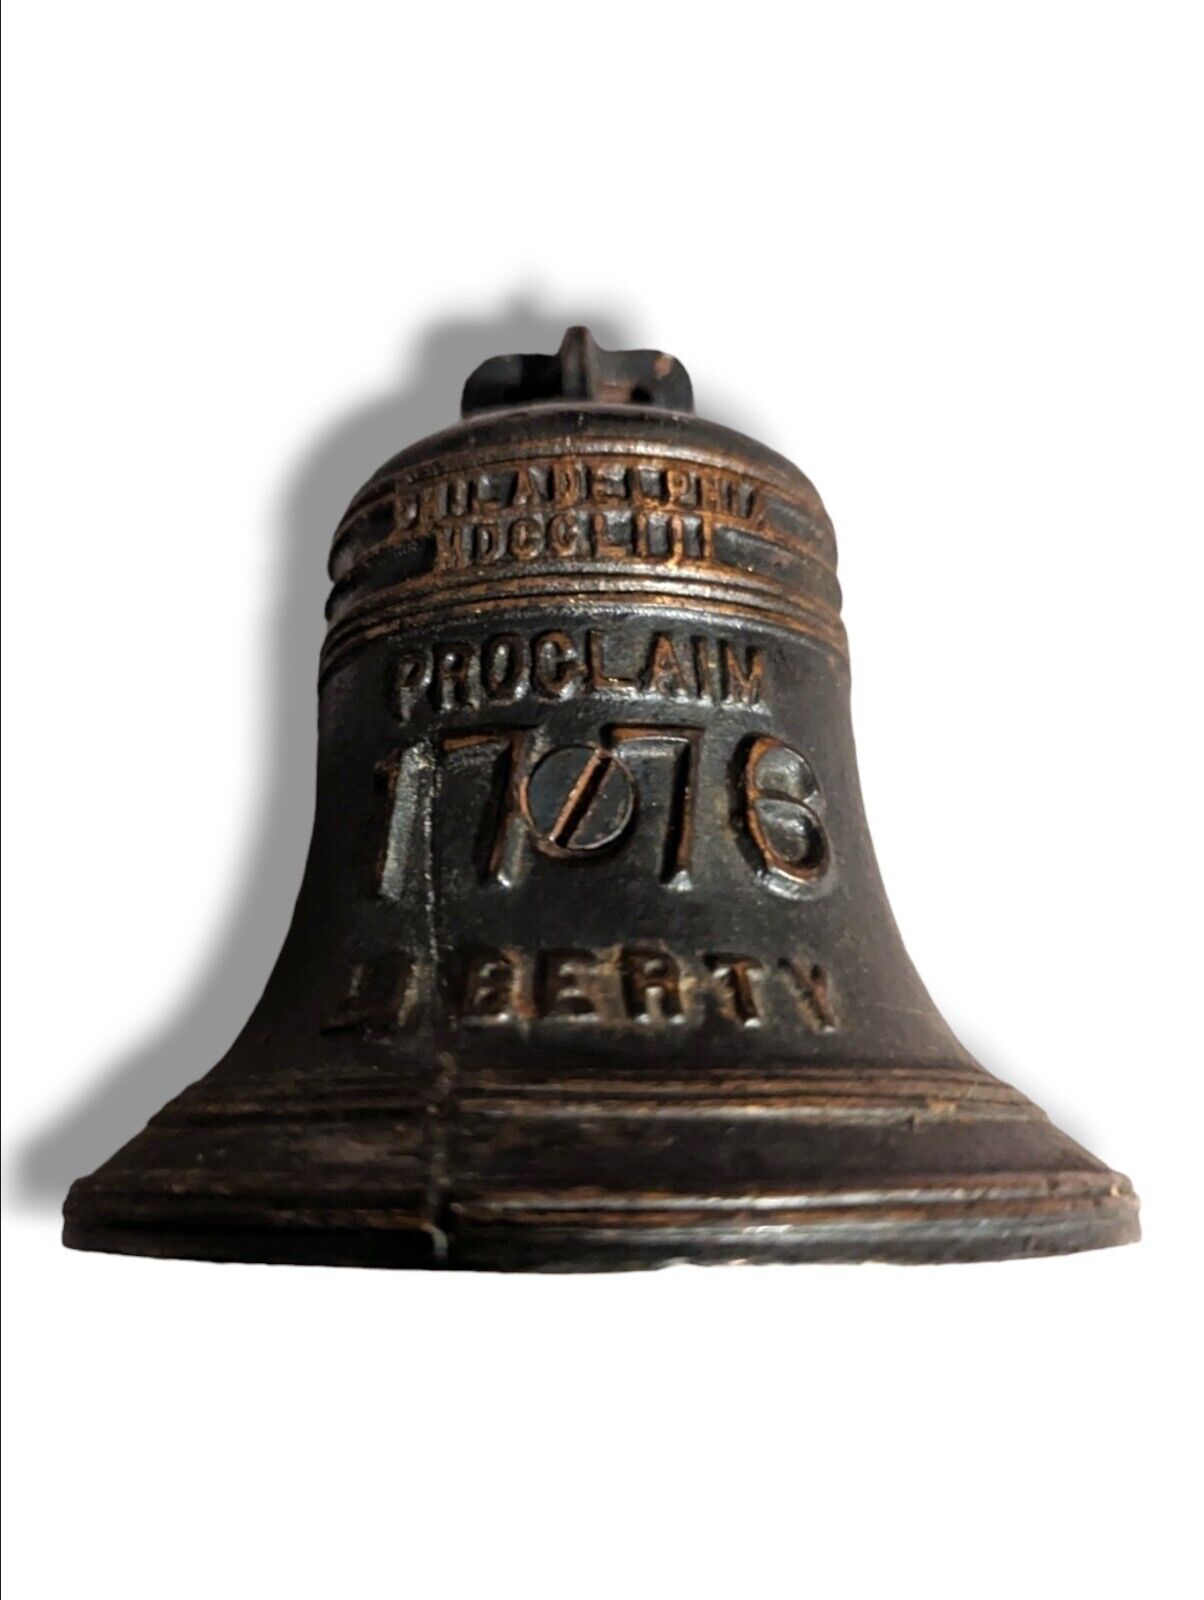 1776-1926 Sesquicentennial Vintage Cast Iron Proclaim Liberty Bell Bank